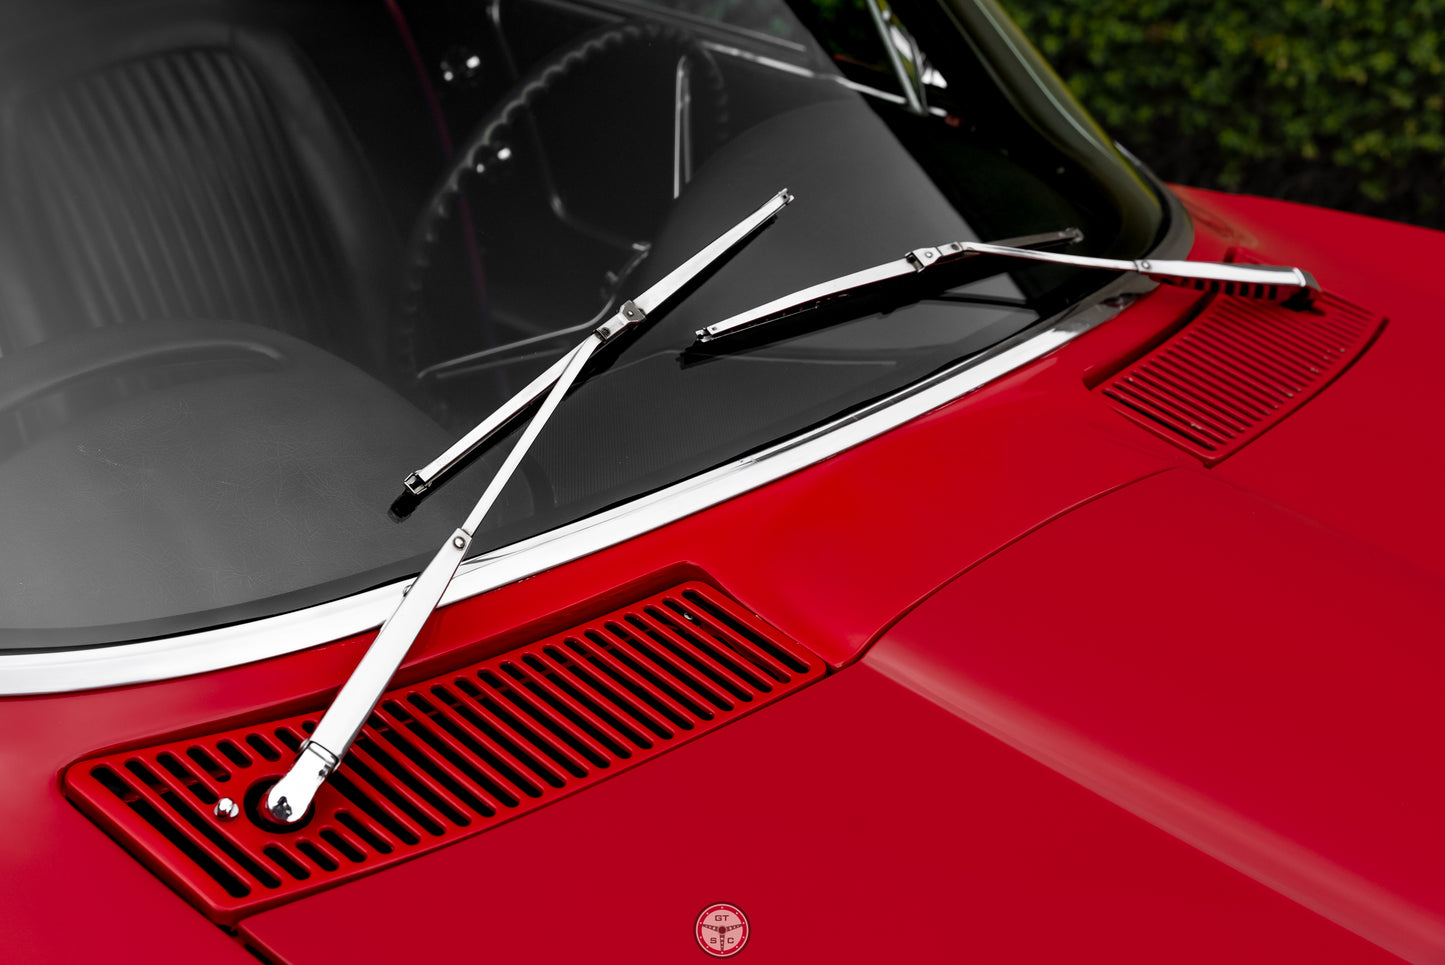 1963 Chevrolet Corvette Split Window Sting Ray C2 Coupe'